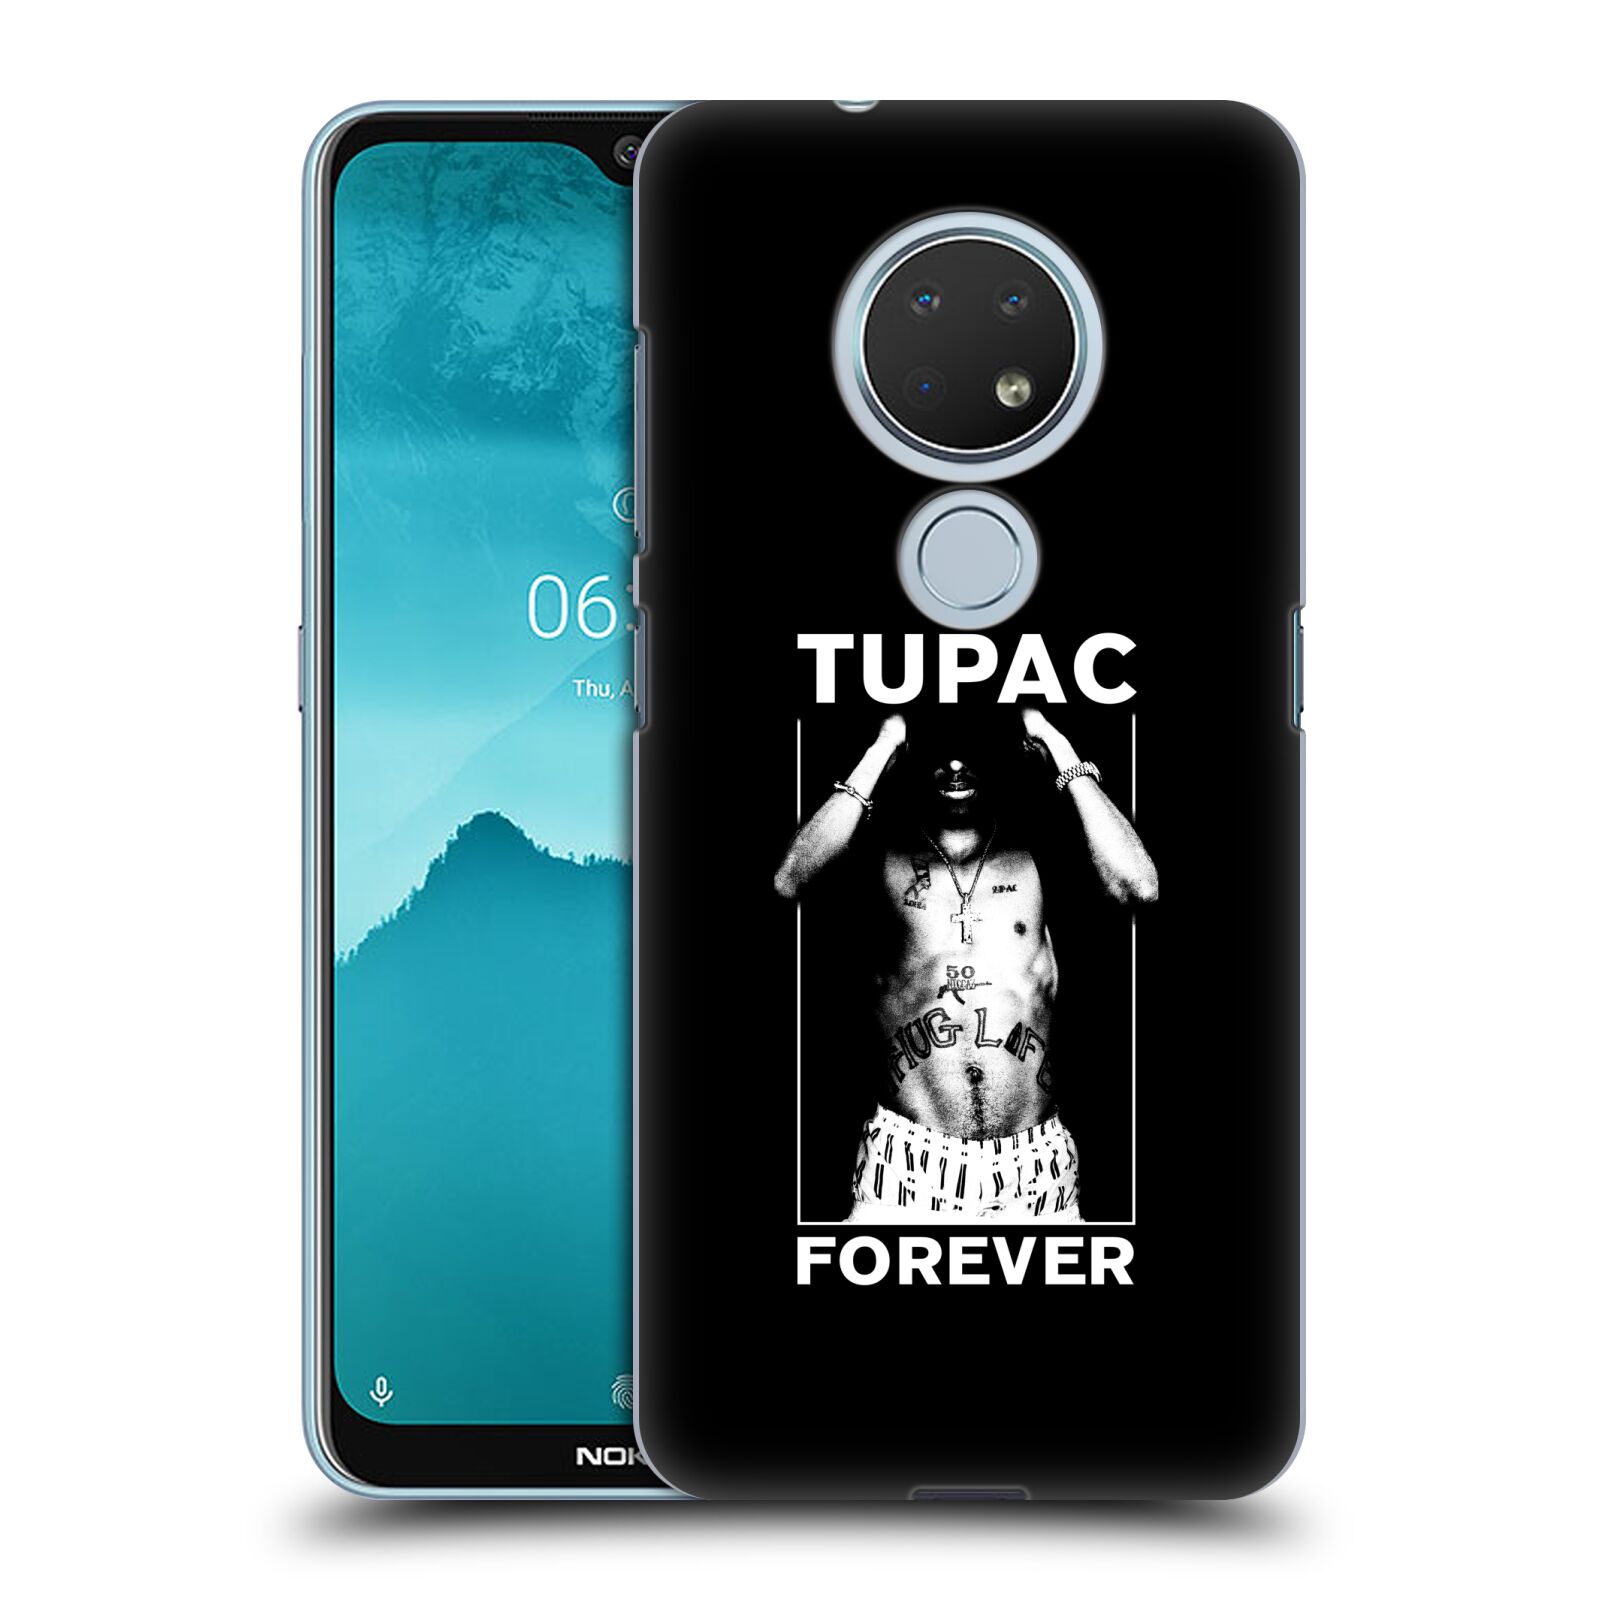 Pouzdro na mobil Nokia 6.2 - HEAD CASE - Zpěvák rapper Tupac Shakur 2Pac bílý popisek FOREVER